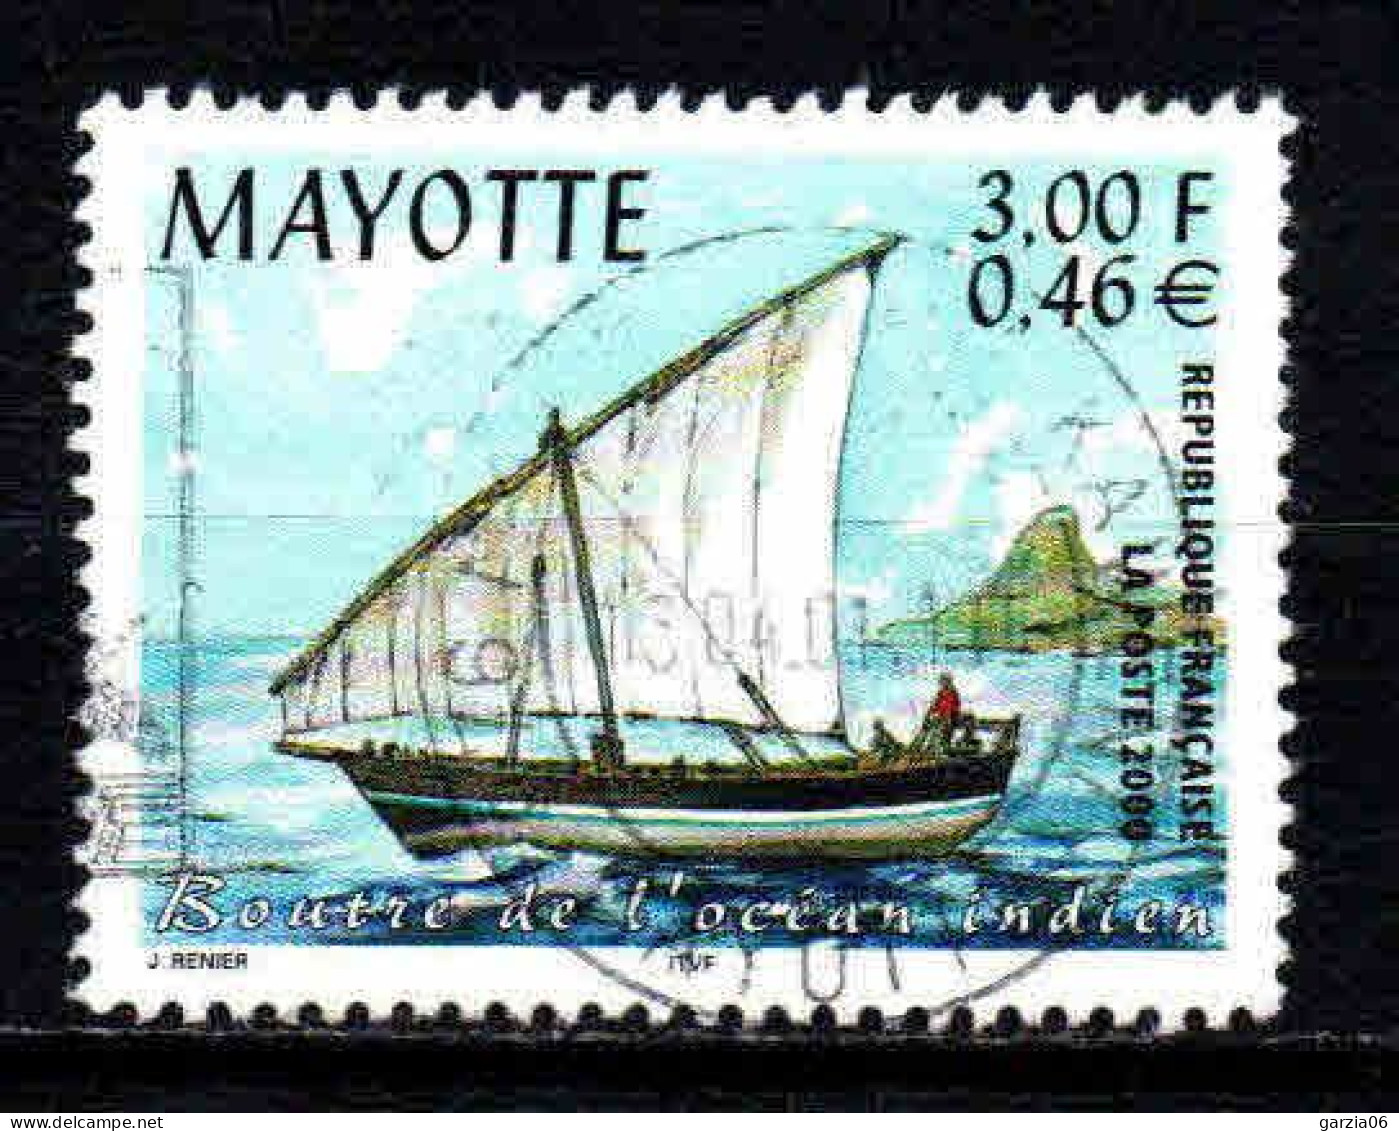 Mayotte - 2000  - Préfecture  - N° 81  -  Oblitéré - Used - Gebraucht